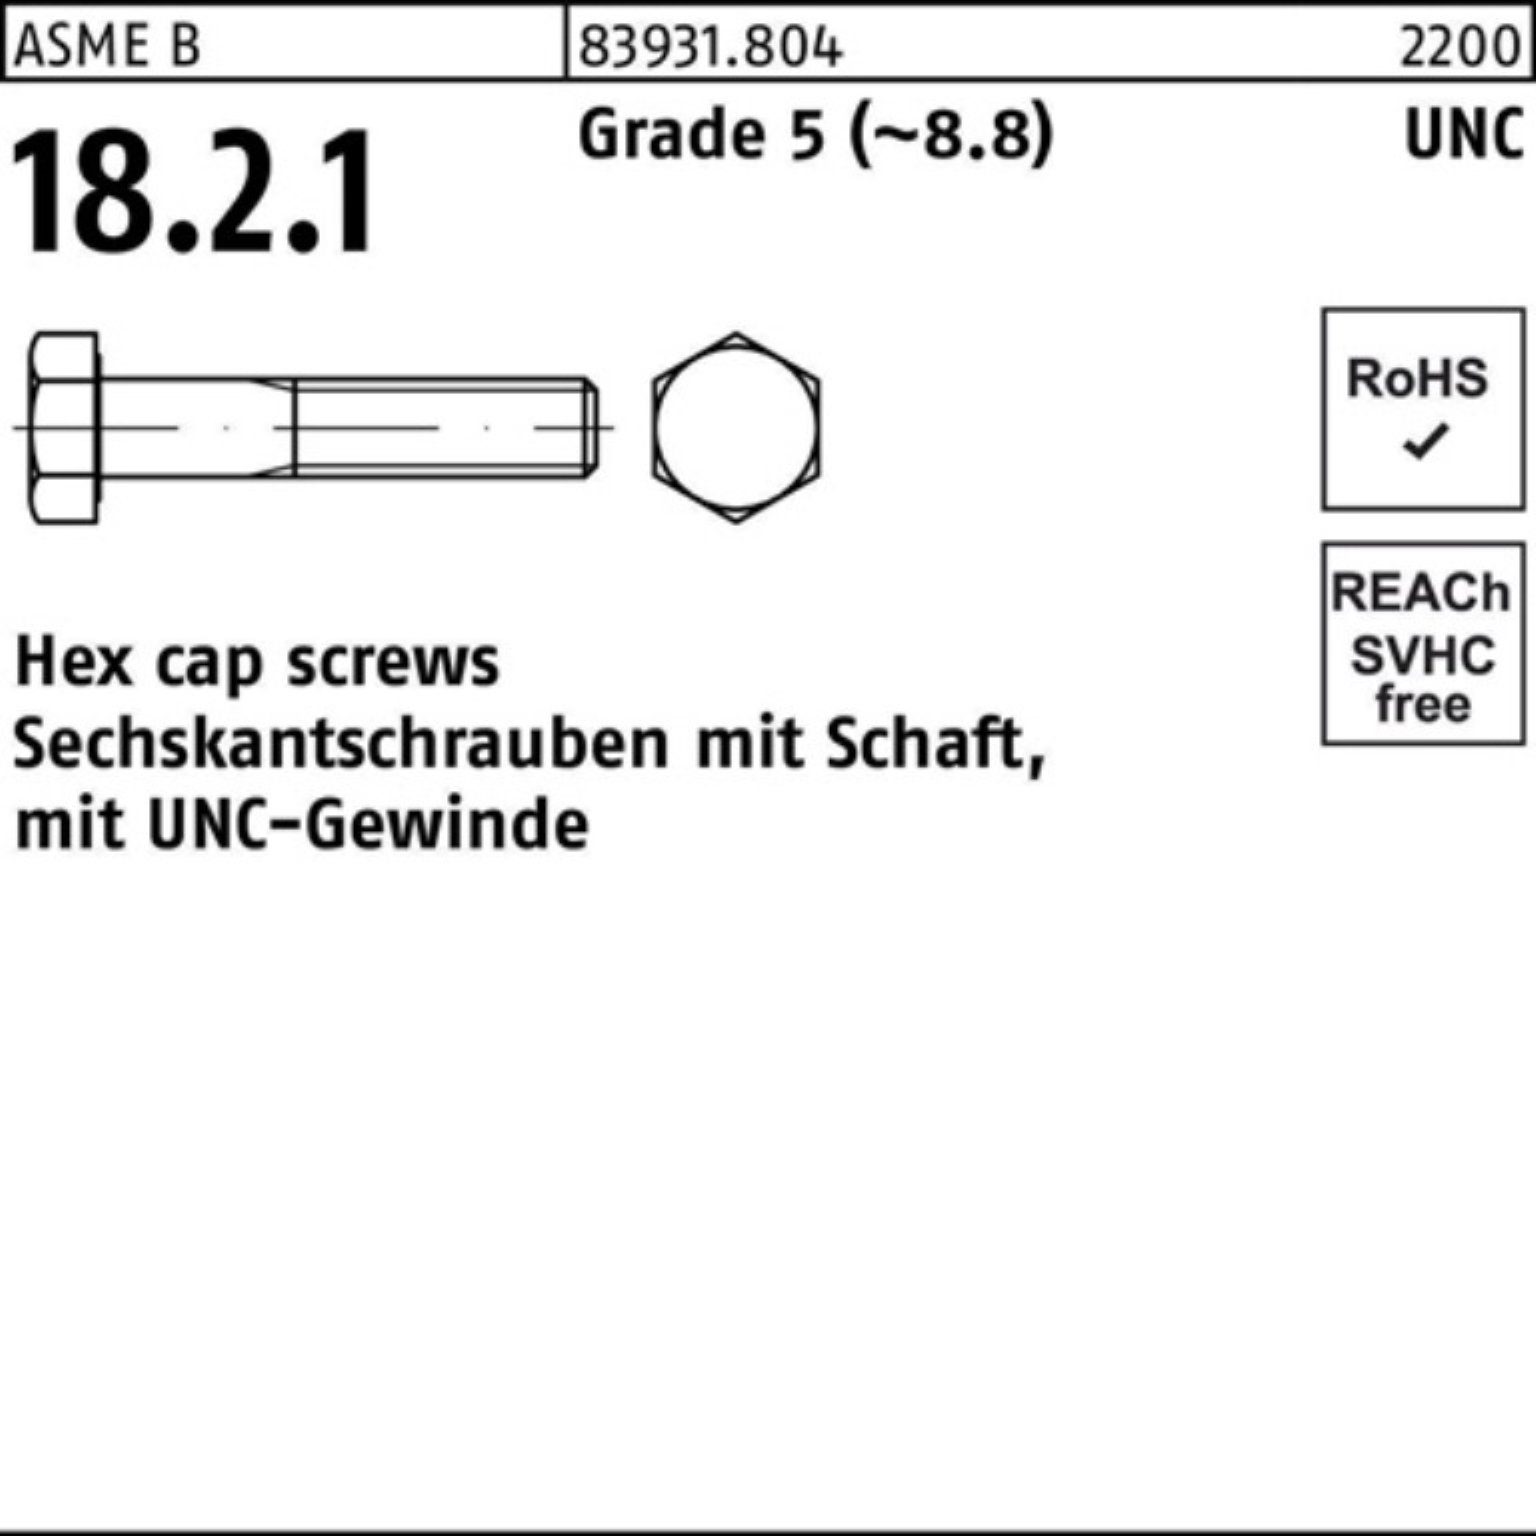 Sechskantschraube 100er 3/8x Sechskantschraube 3 Reyher Pack Grade 5 UNC-Gewinde/Schaft R 83931